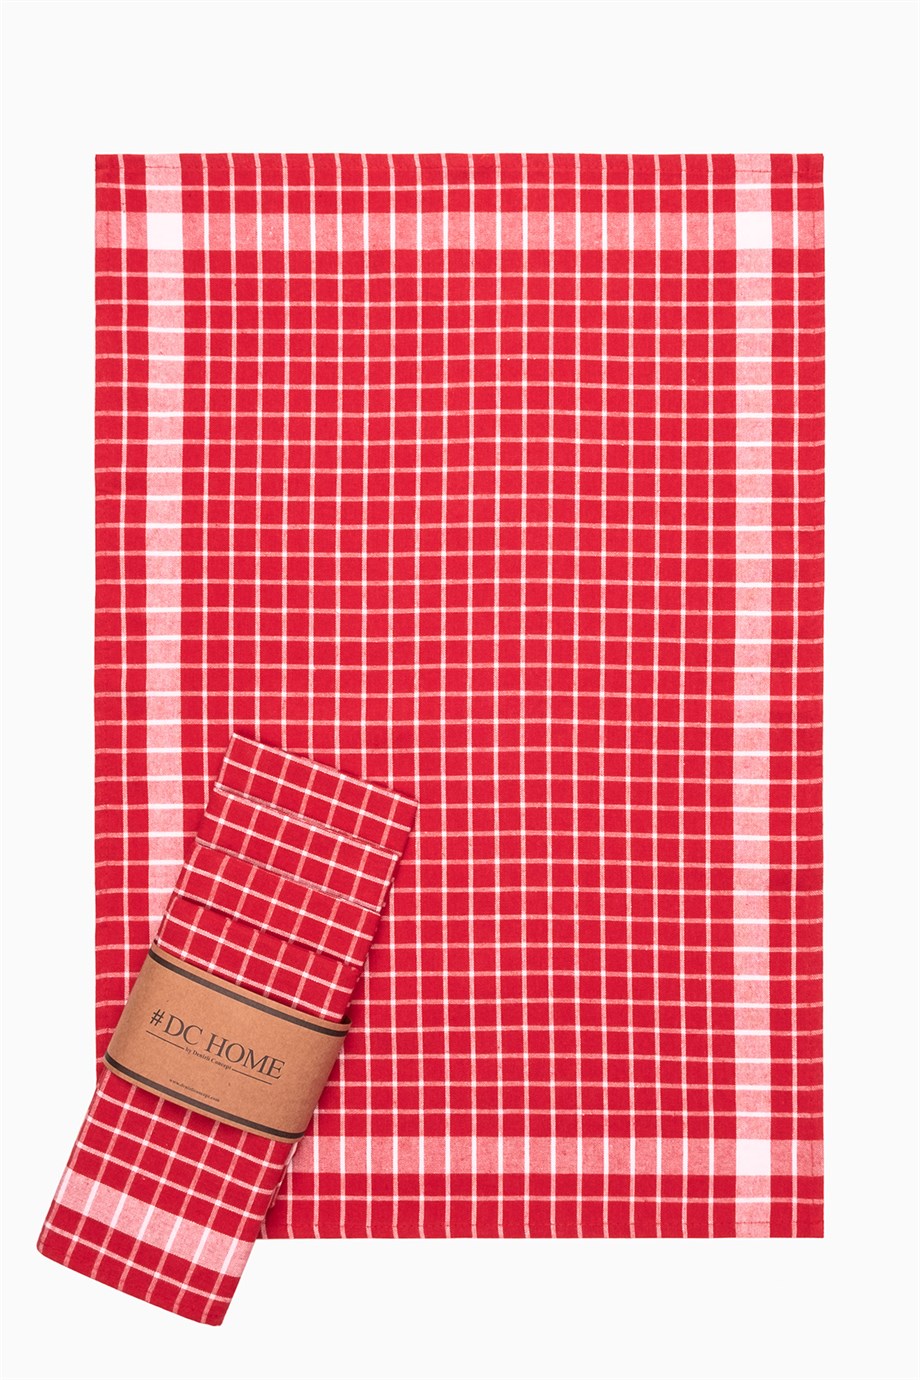 DENIZLI CONCEPT Checkered Tea Towel Red